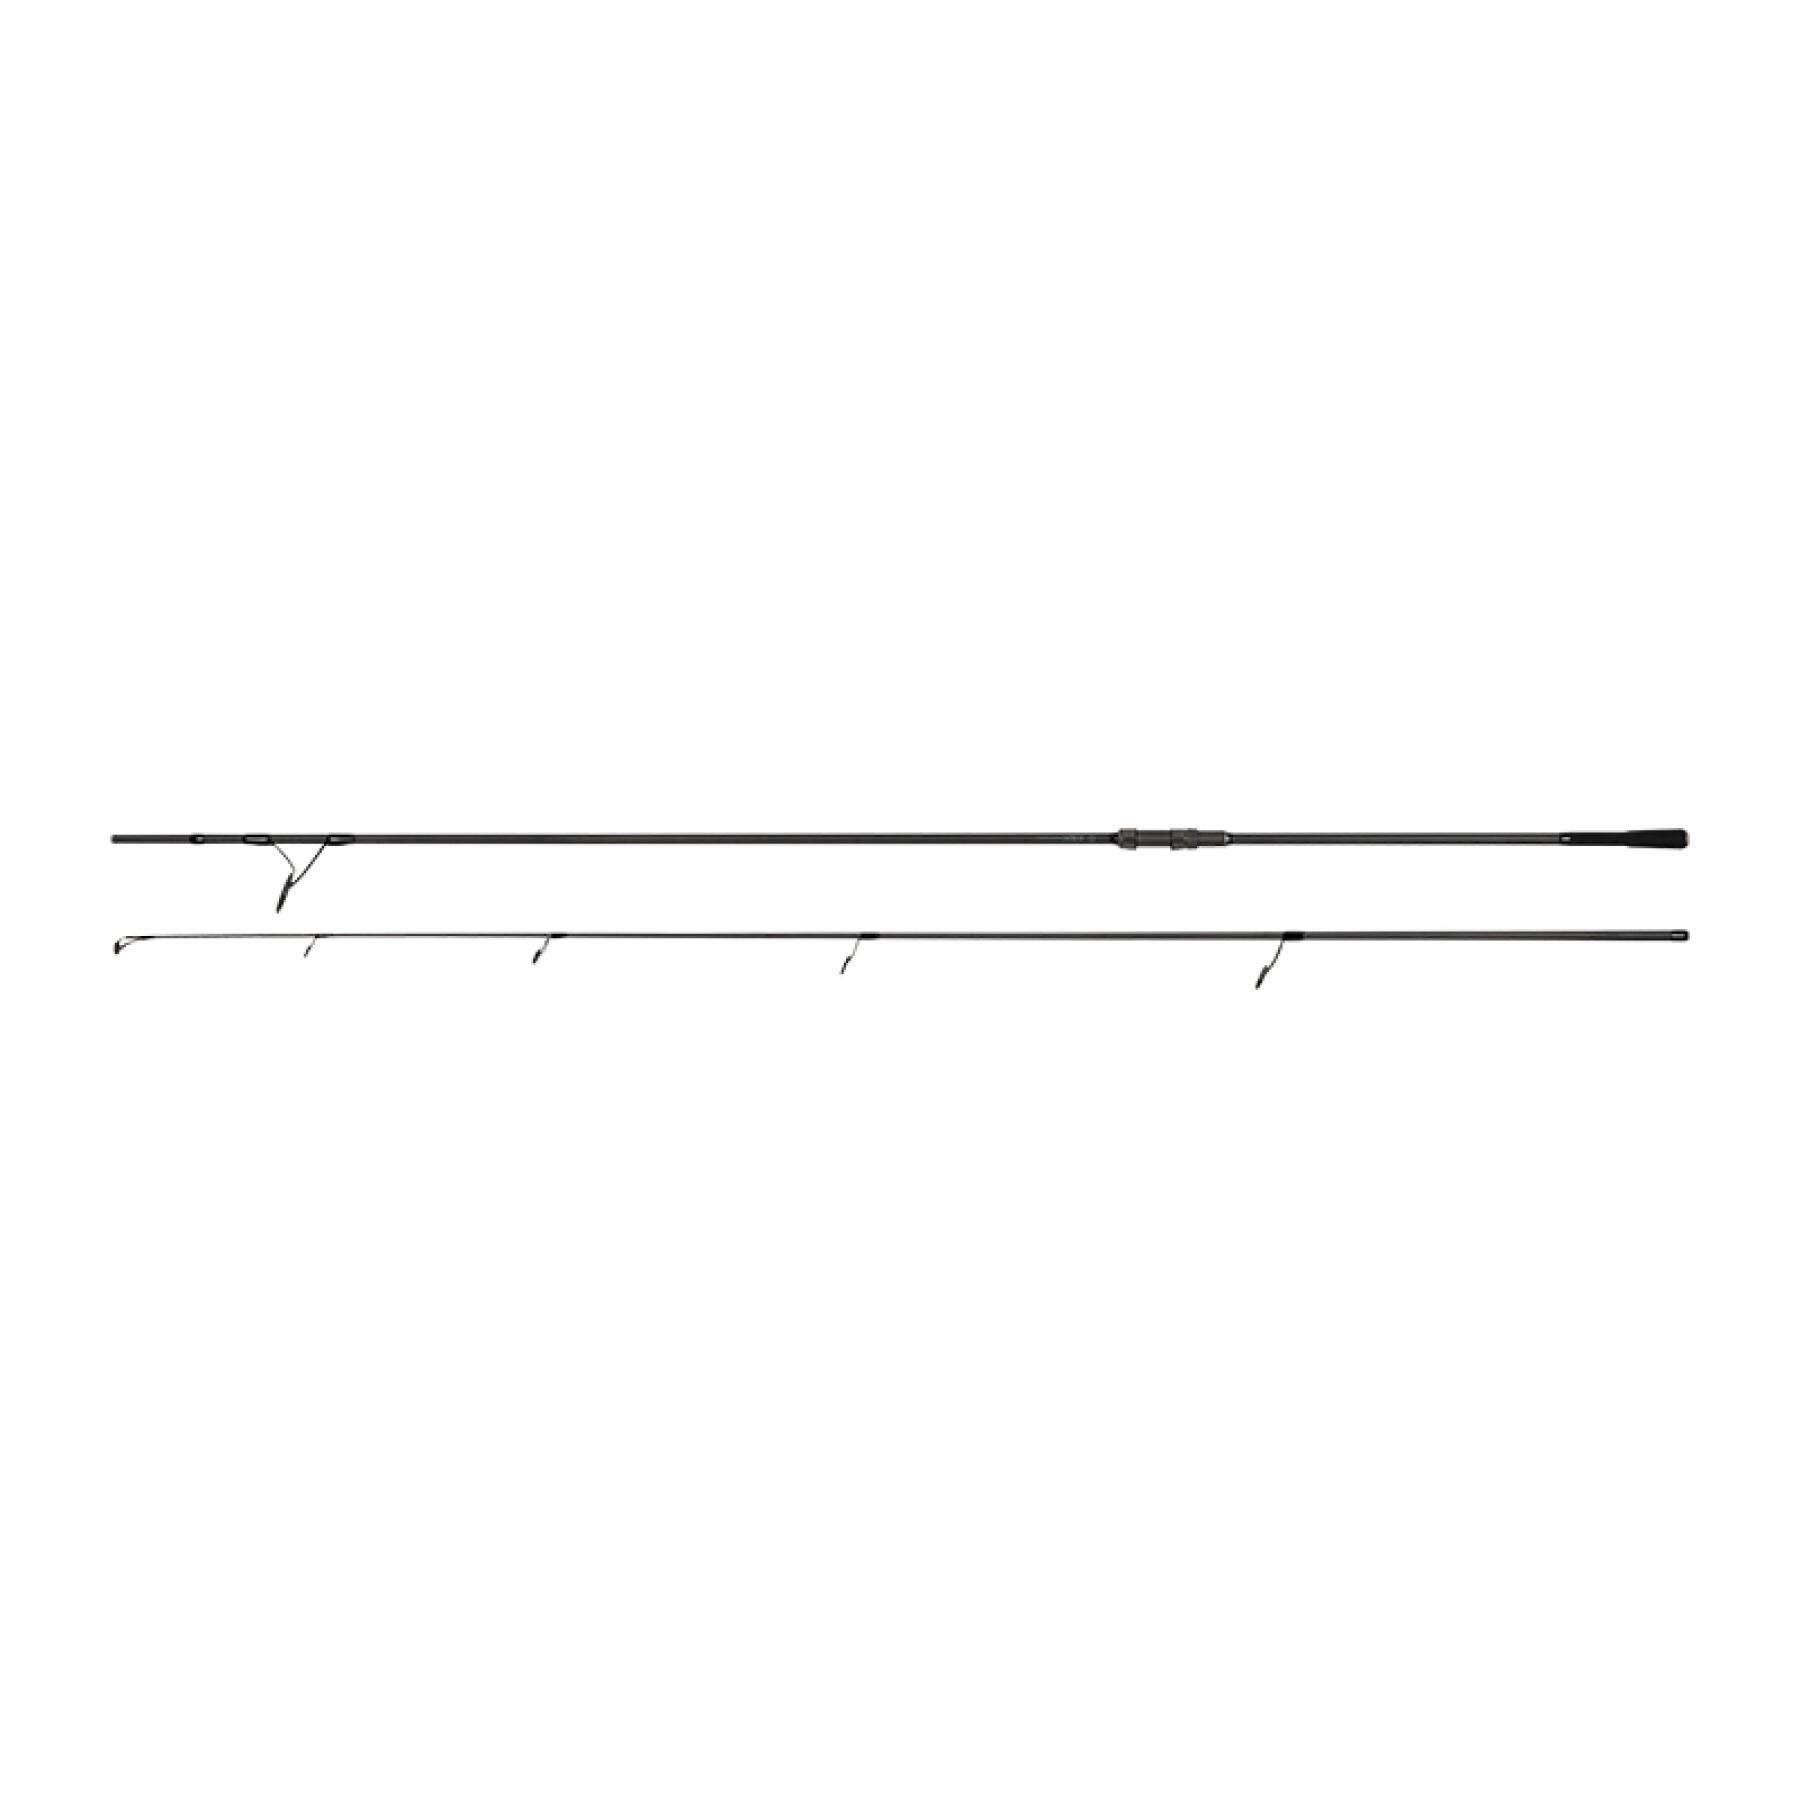 Karperhengel Fox horizon X5 - S 13ft 3.75lb